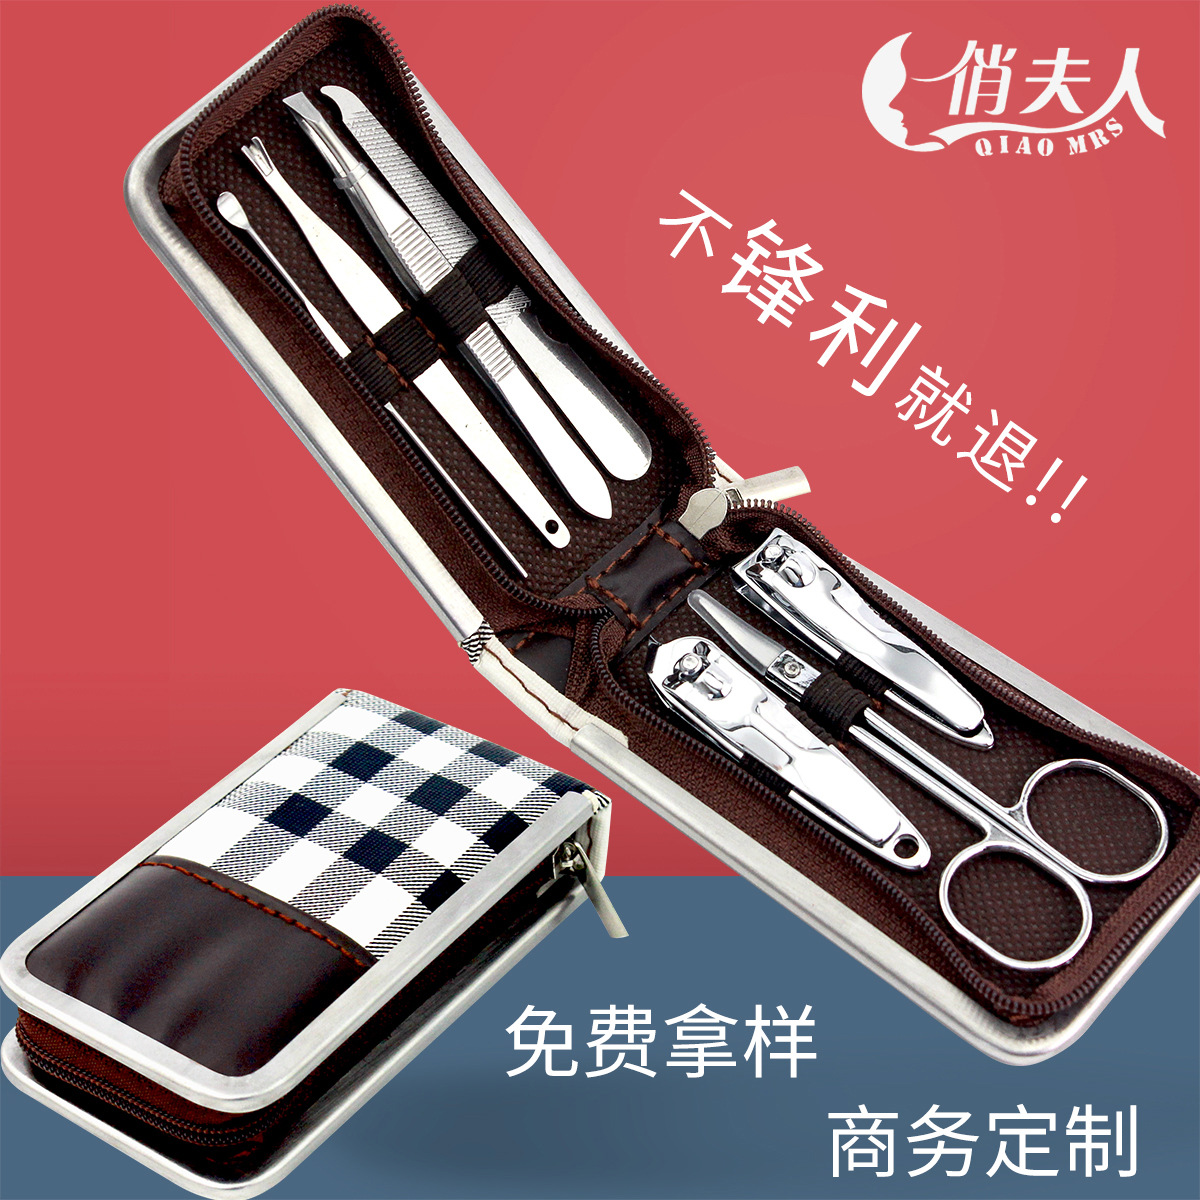 Mrs. Set of parts zipper Nail clippers Beauty Scissors Manicure pliers Nail enhancement tool suit customized advertisement LOGO